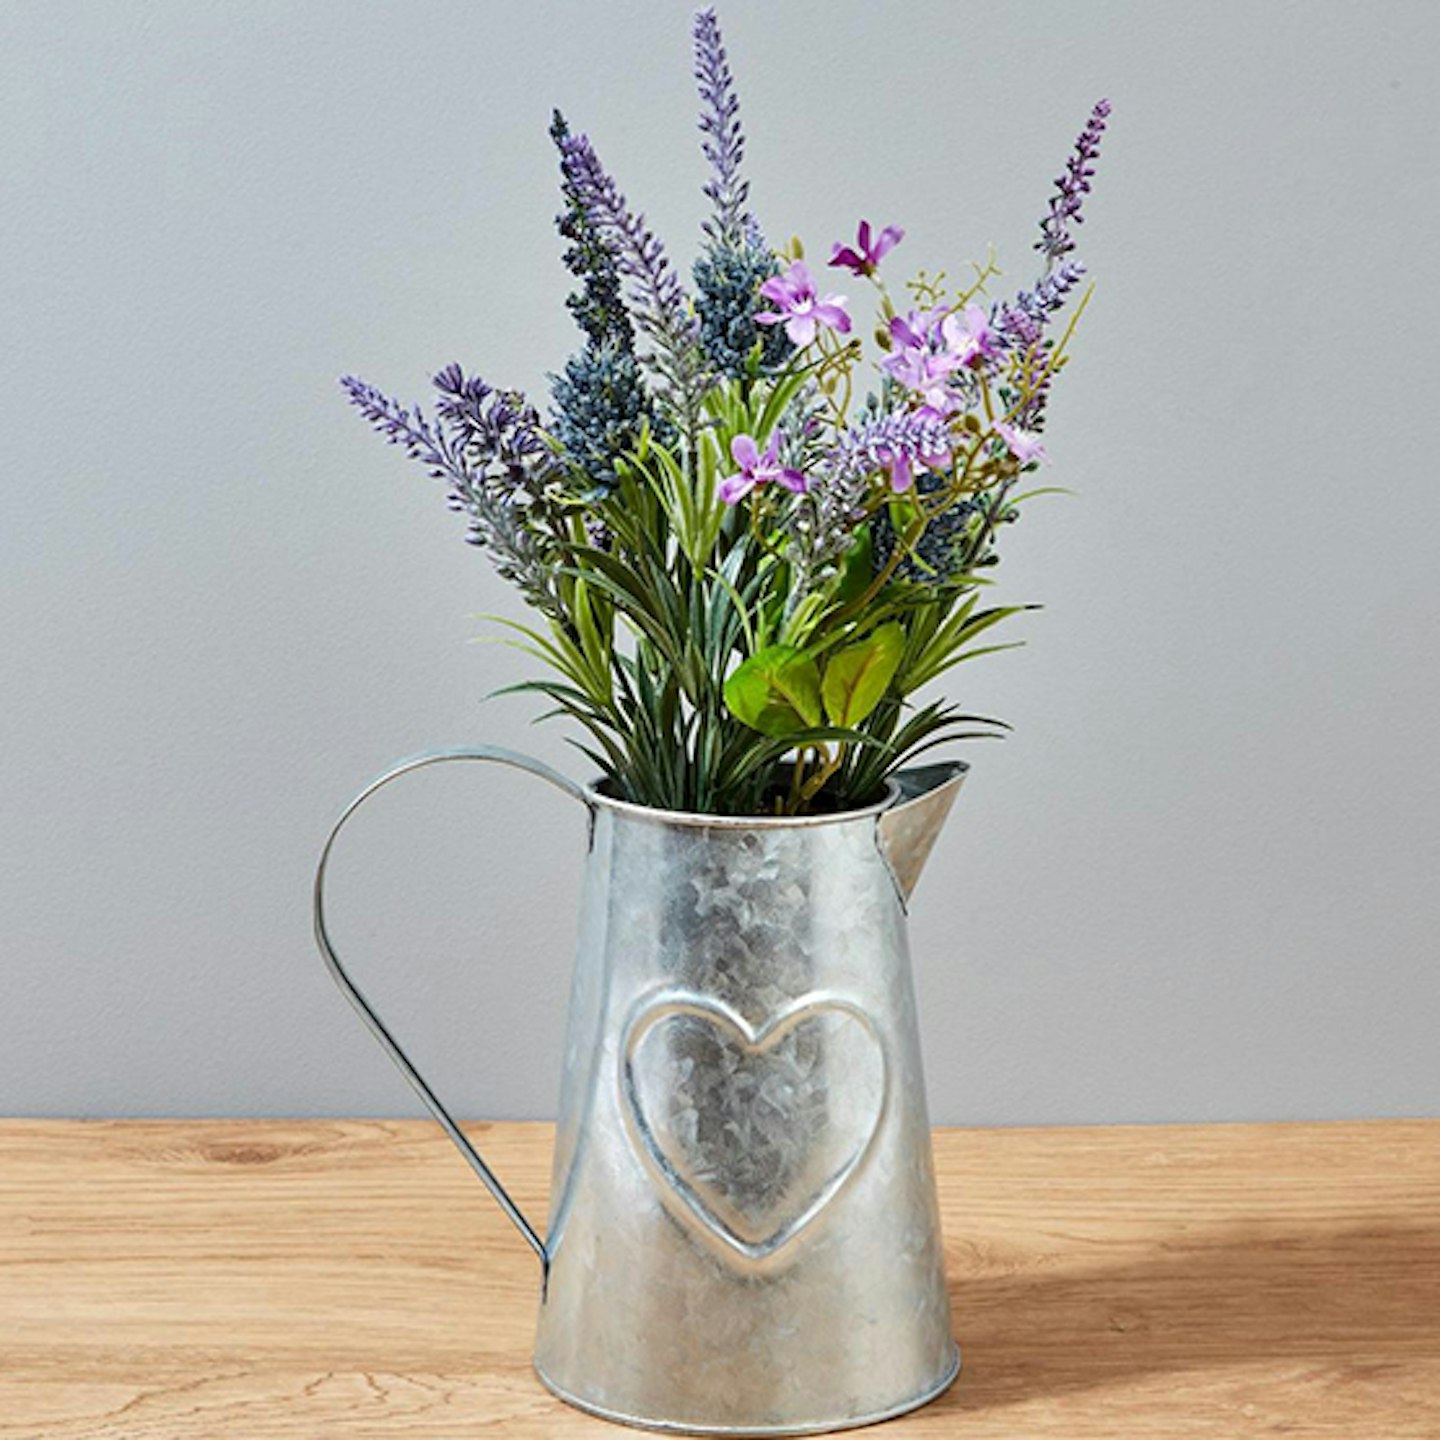 Flowers in a jug